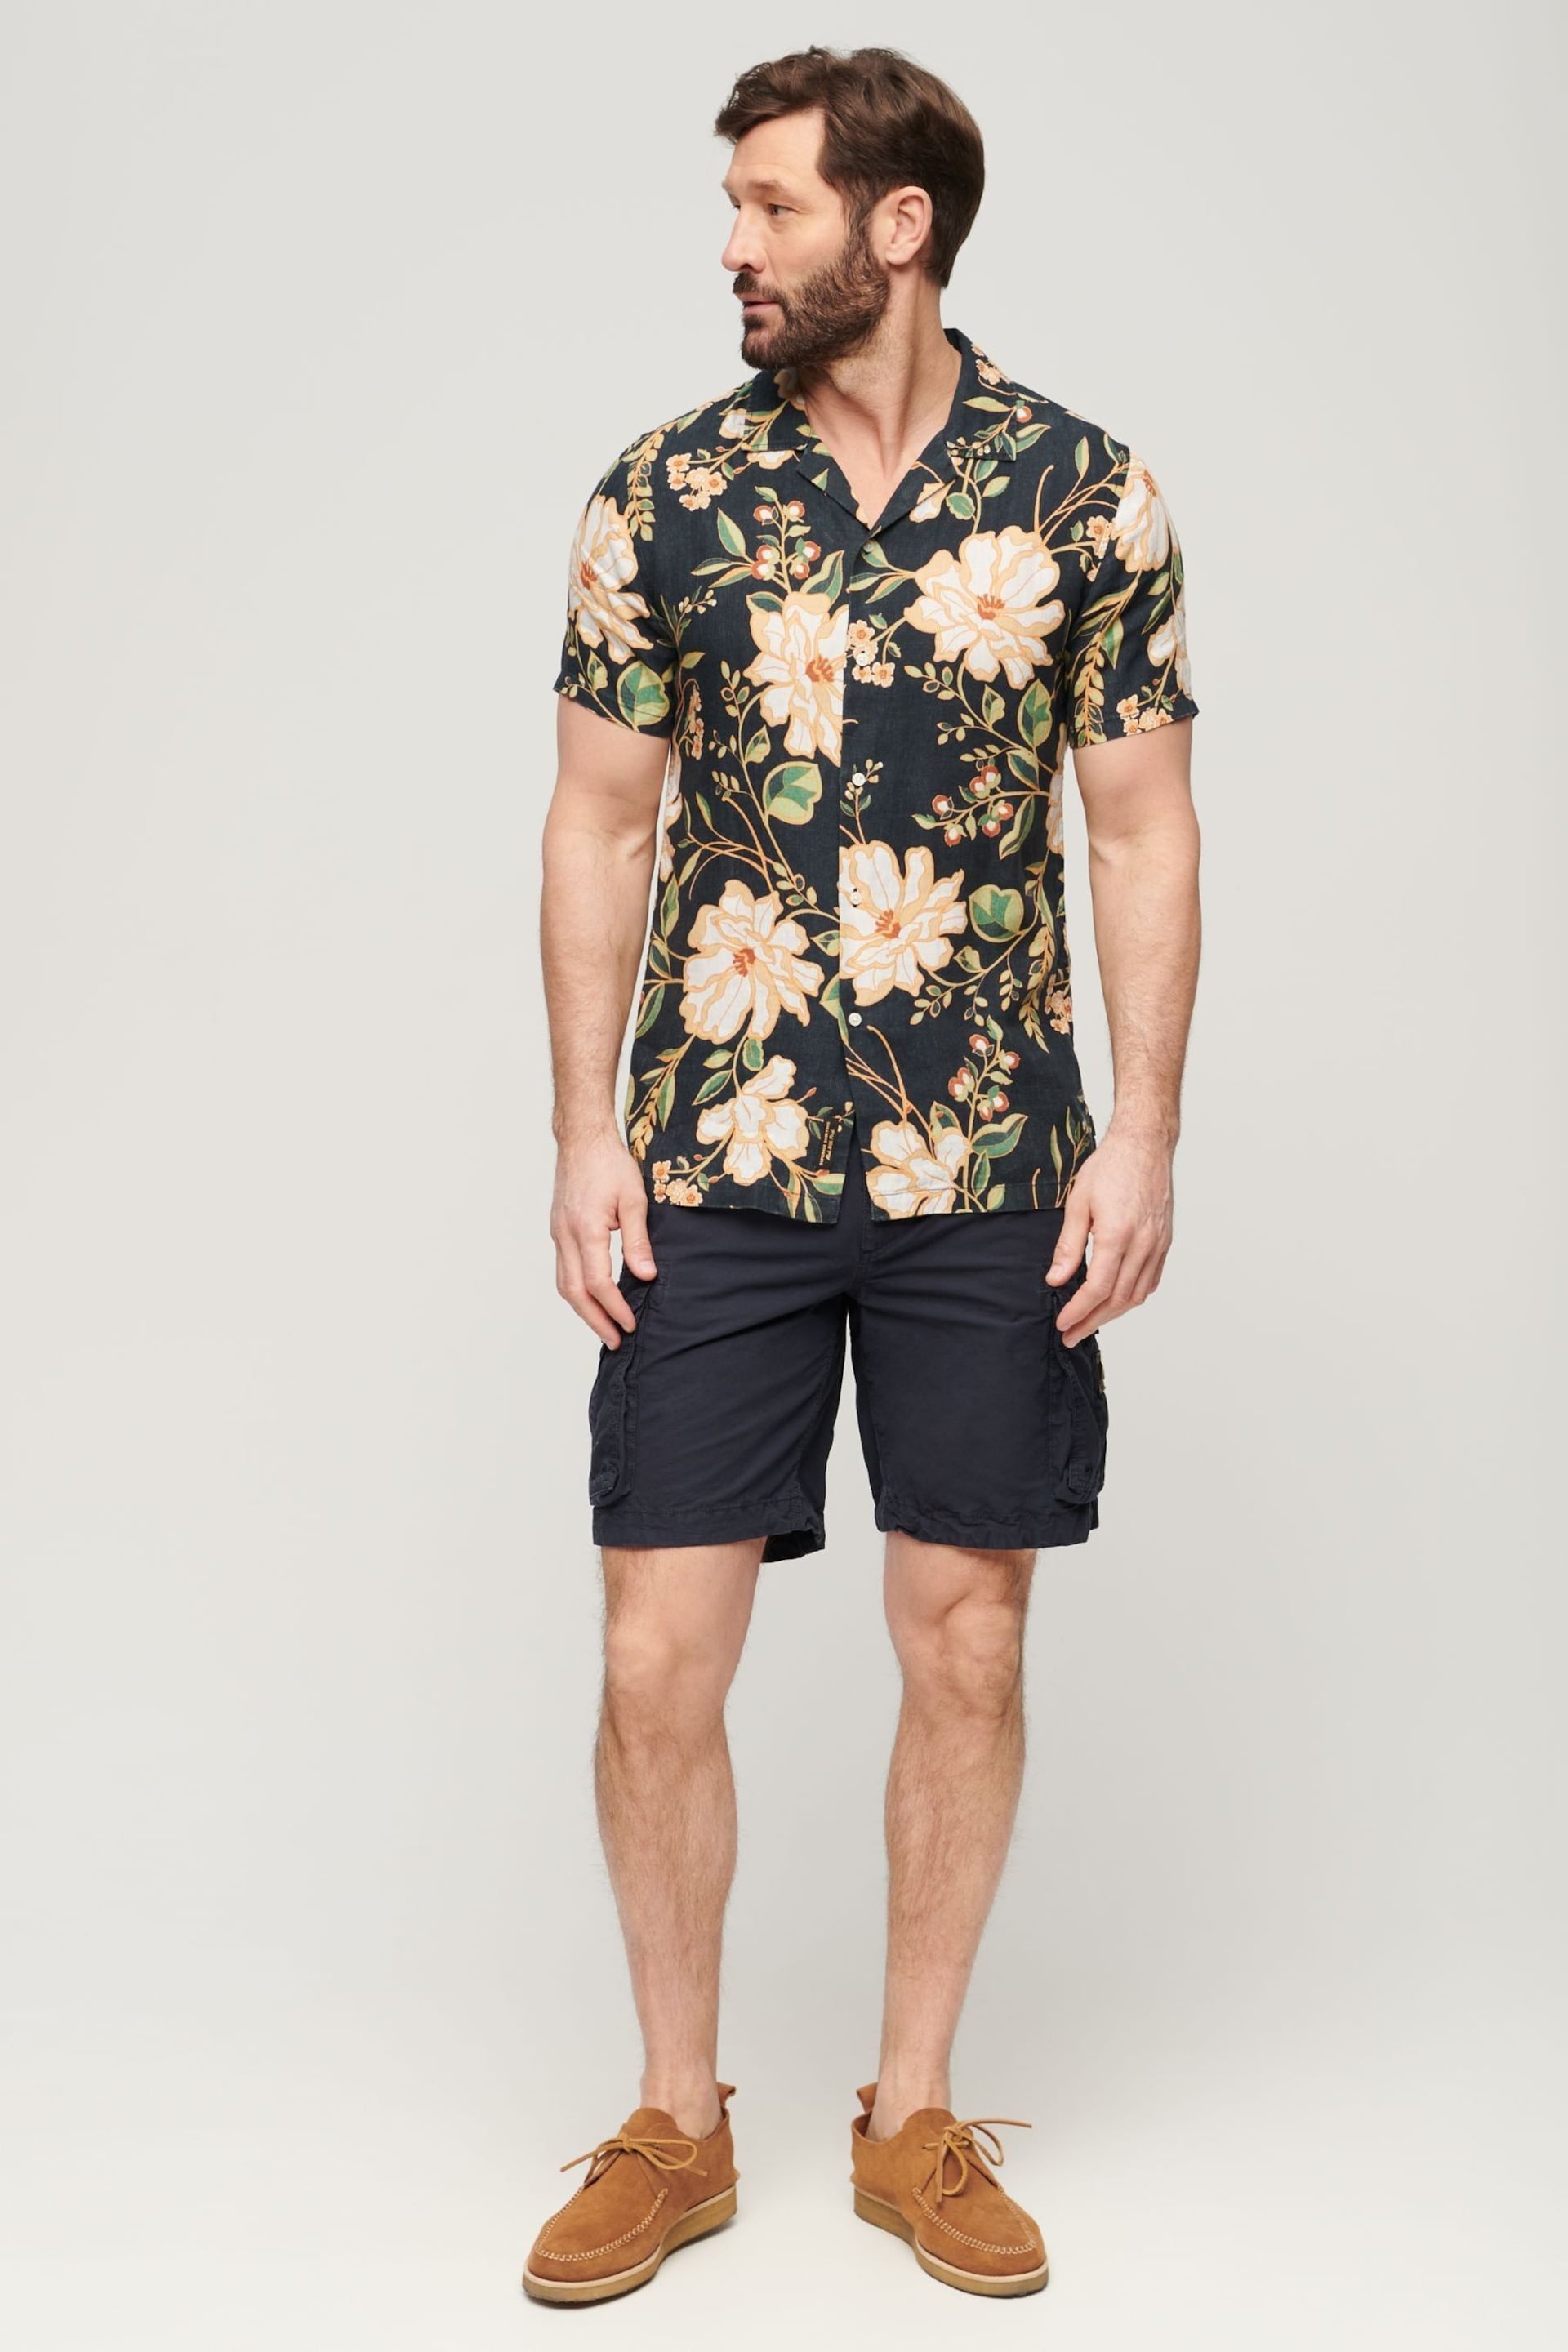 Superdry Black Short Sleeve Hawaiian Printed Shirt - Image 2 of 6